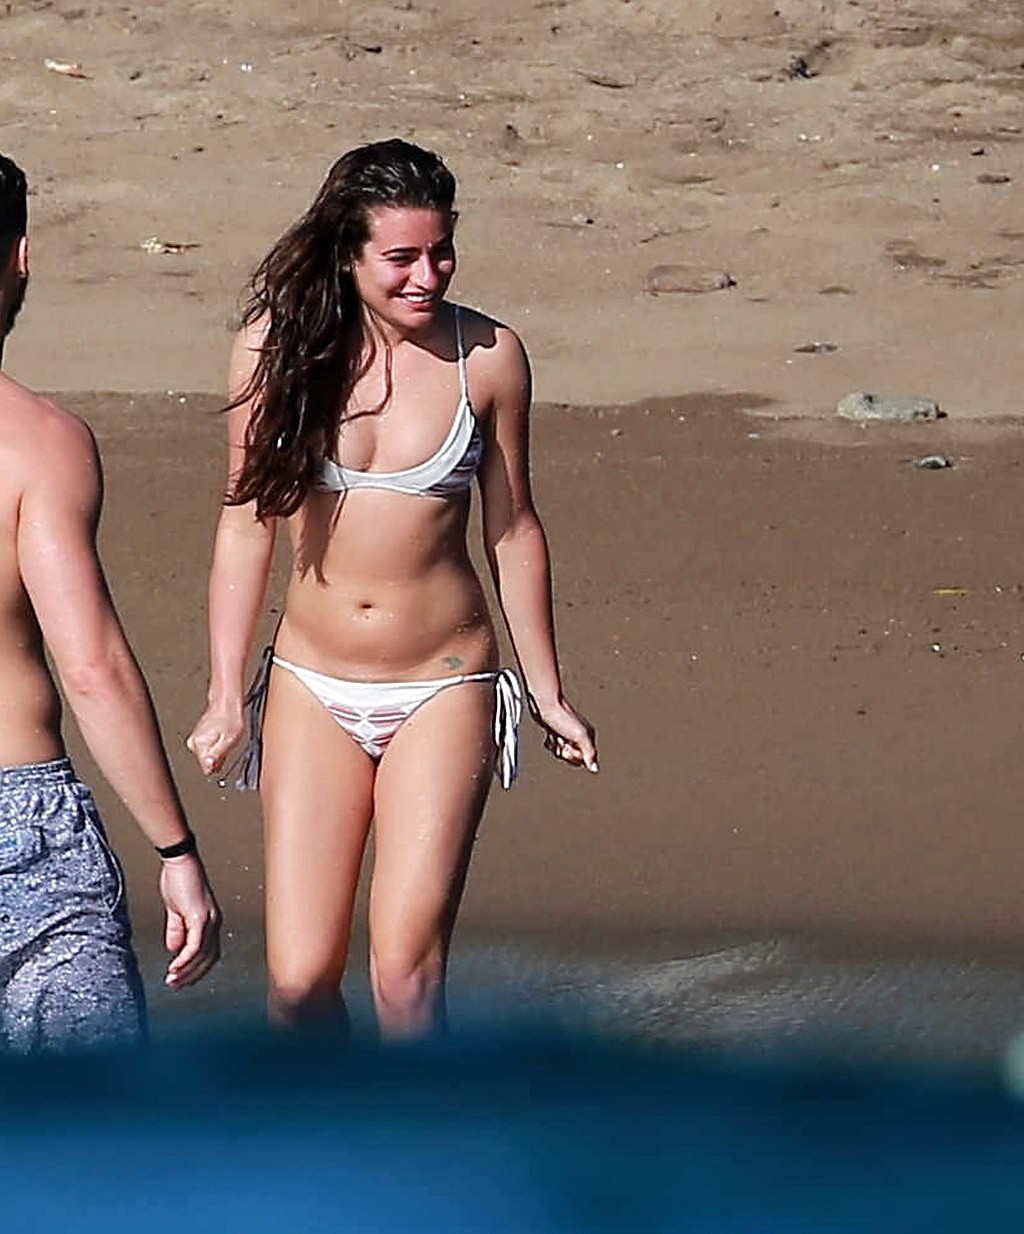 Lea Michele wearing skimpy bikini on a beach in Mexico #75177118